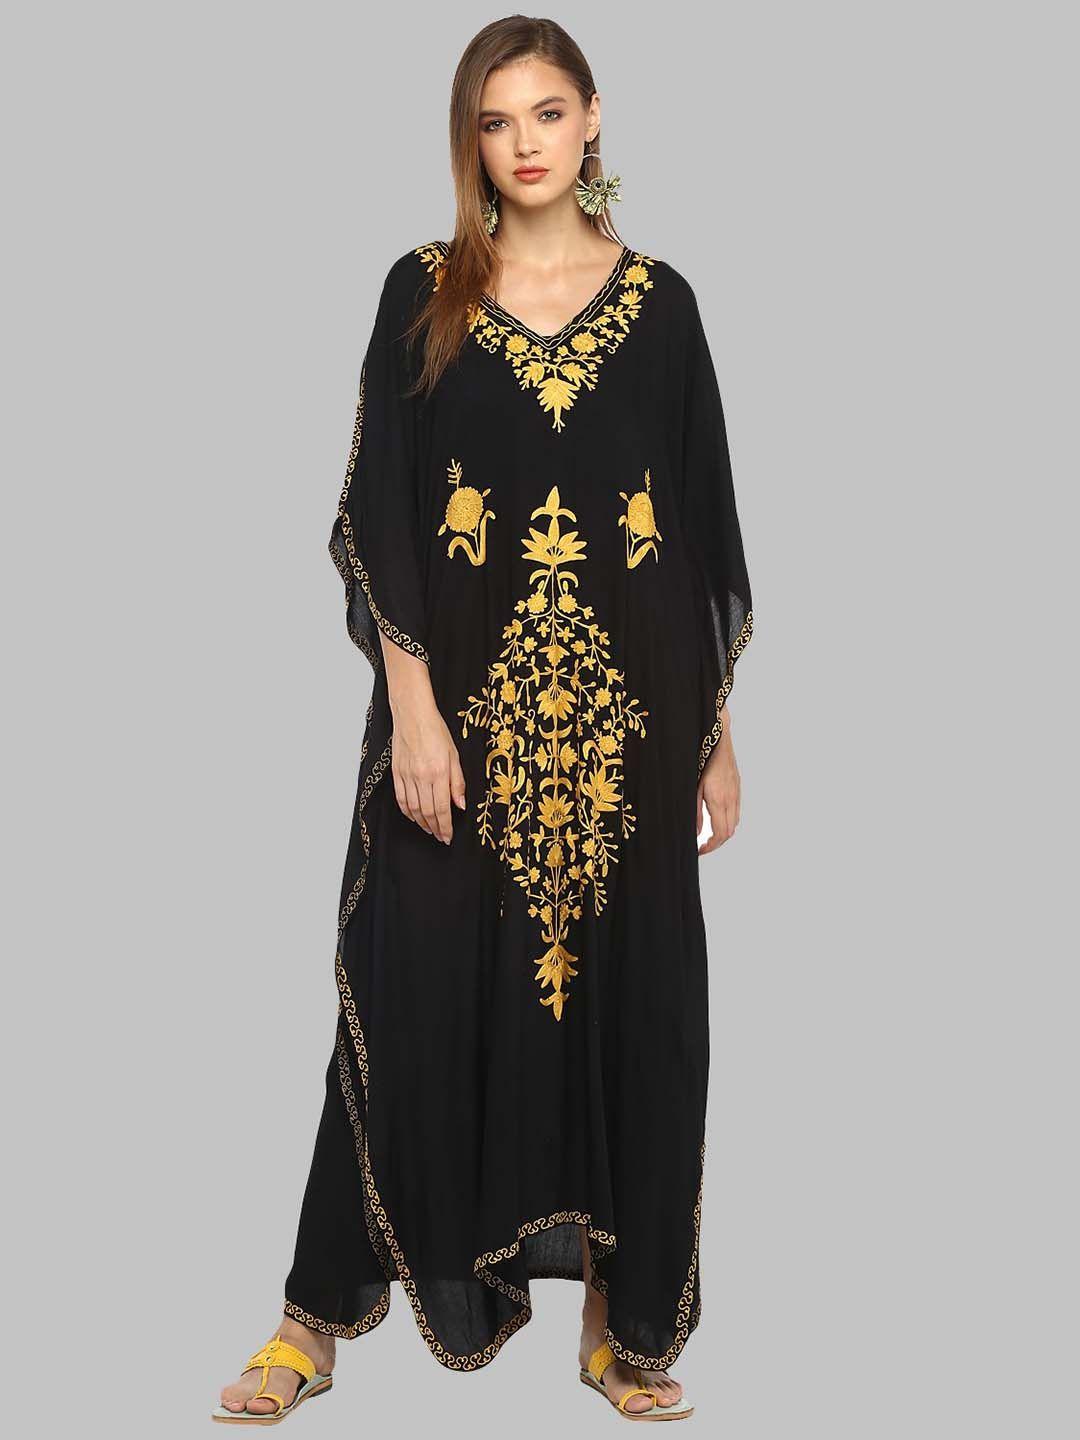 craftbazar-ethnic-motif-embroidered-kaftan-maxi-ethnic-dress